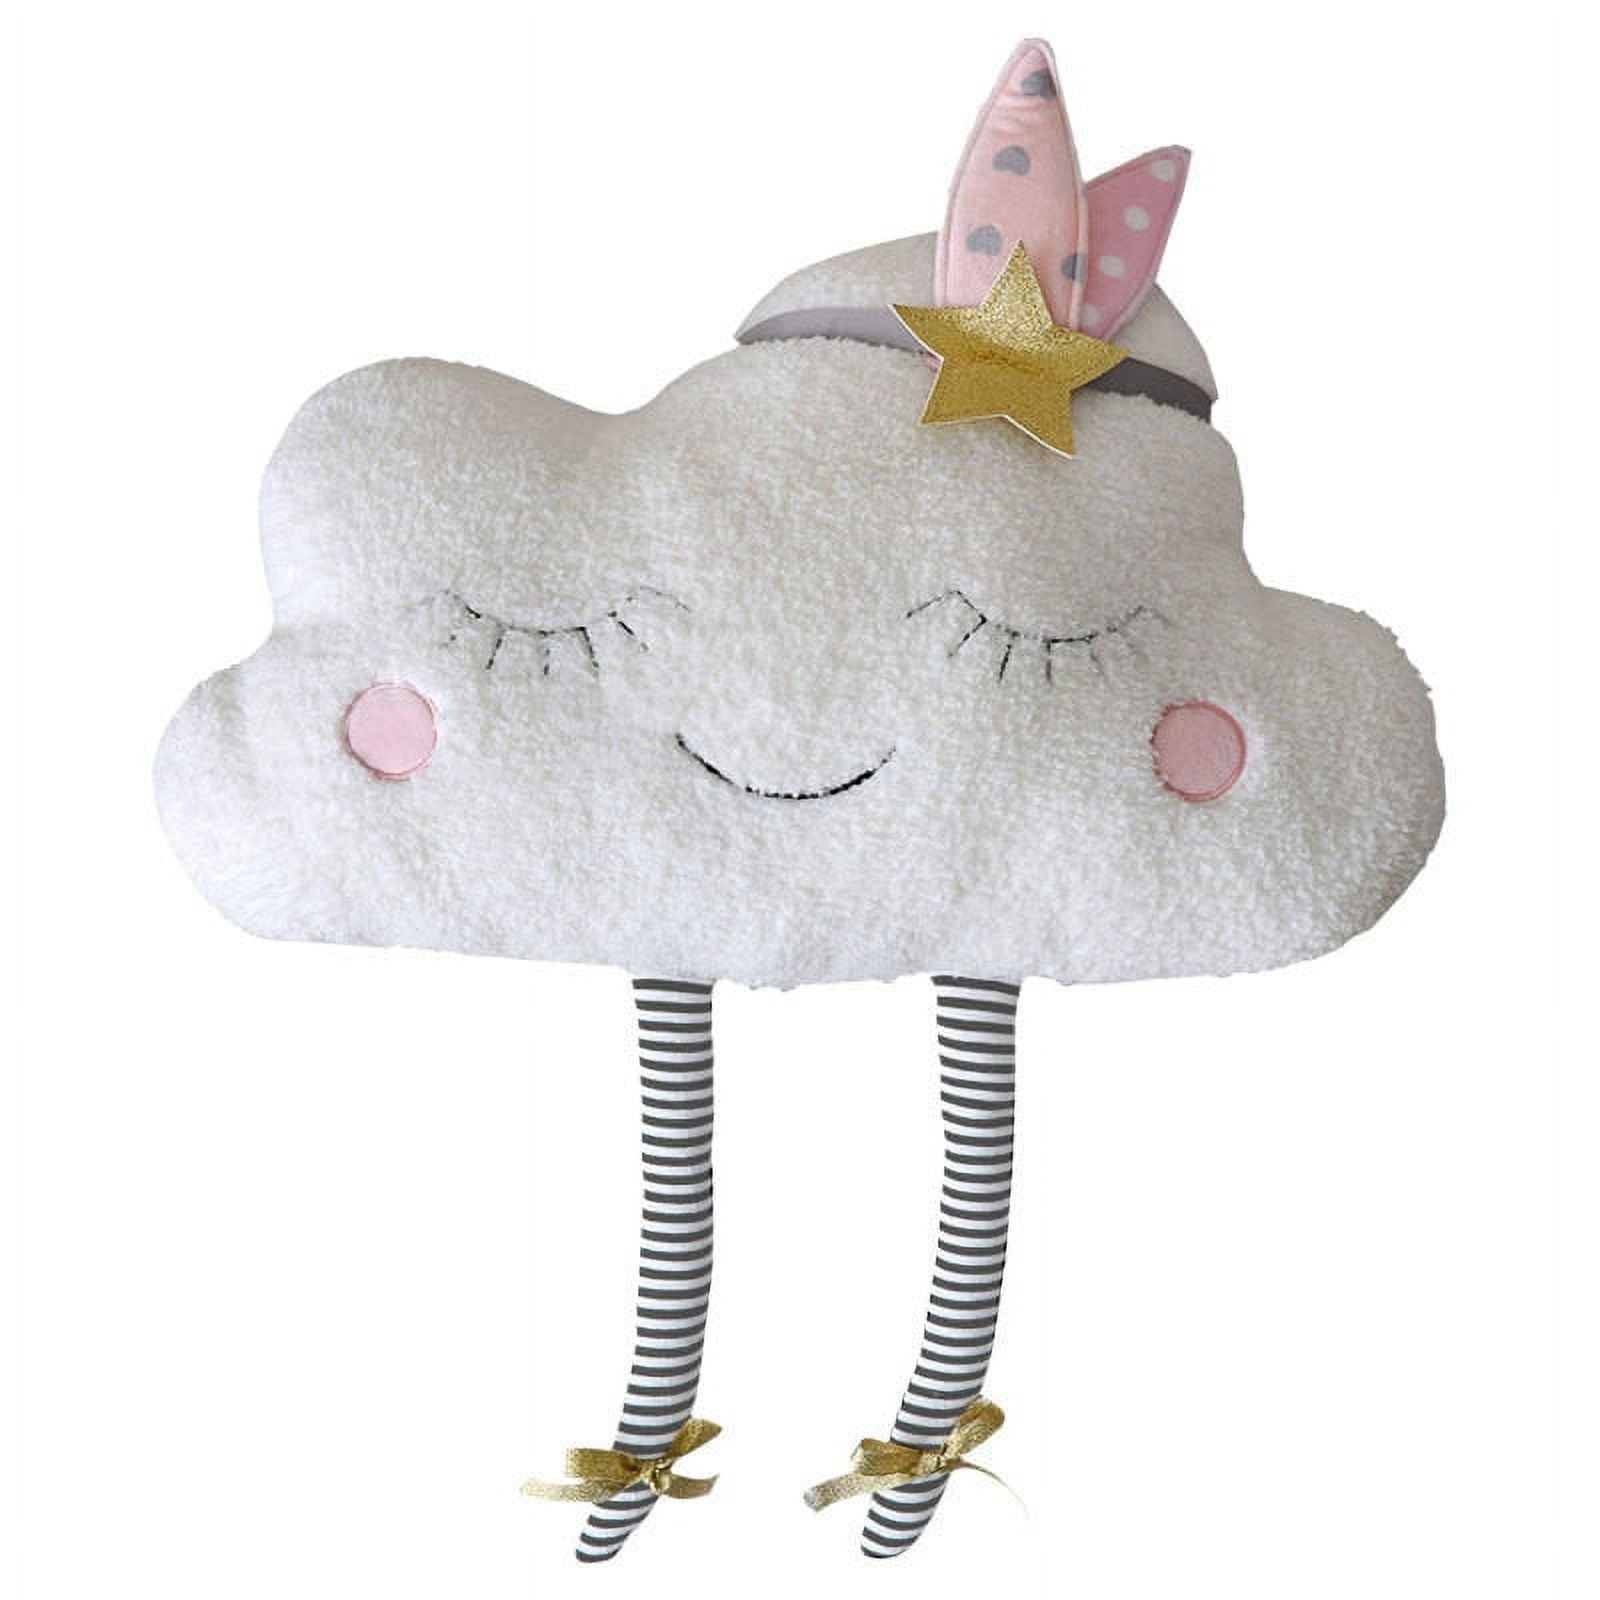 White Cloud Cushion Baby and Playroom Decor Cloud Pillow for Neutral  Nursery 